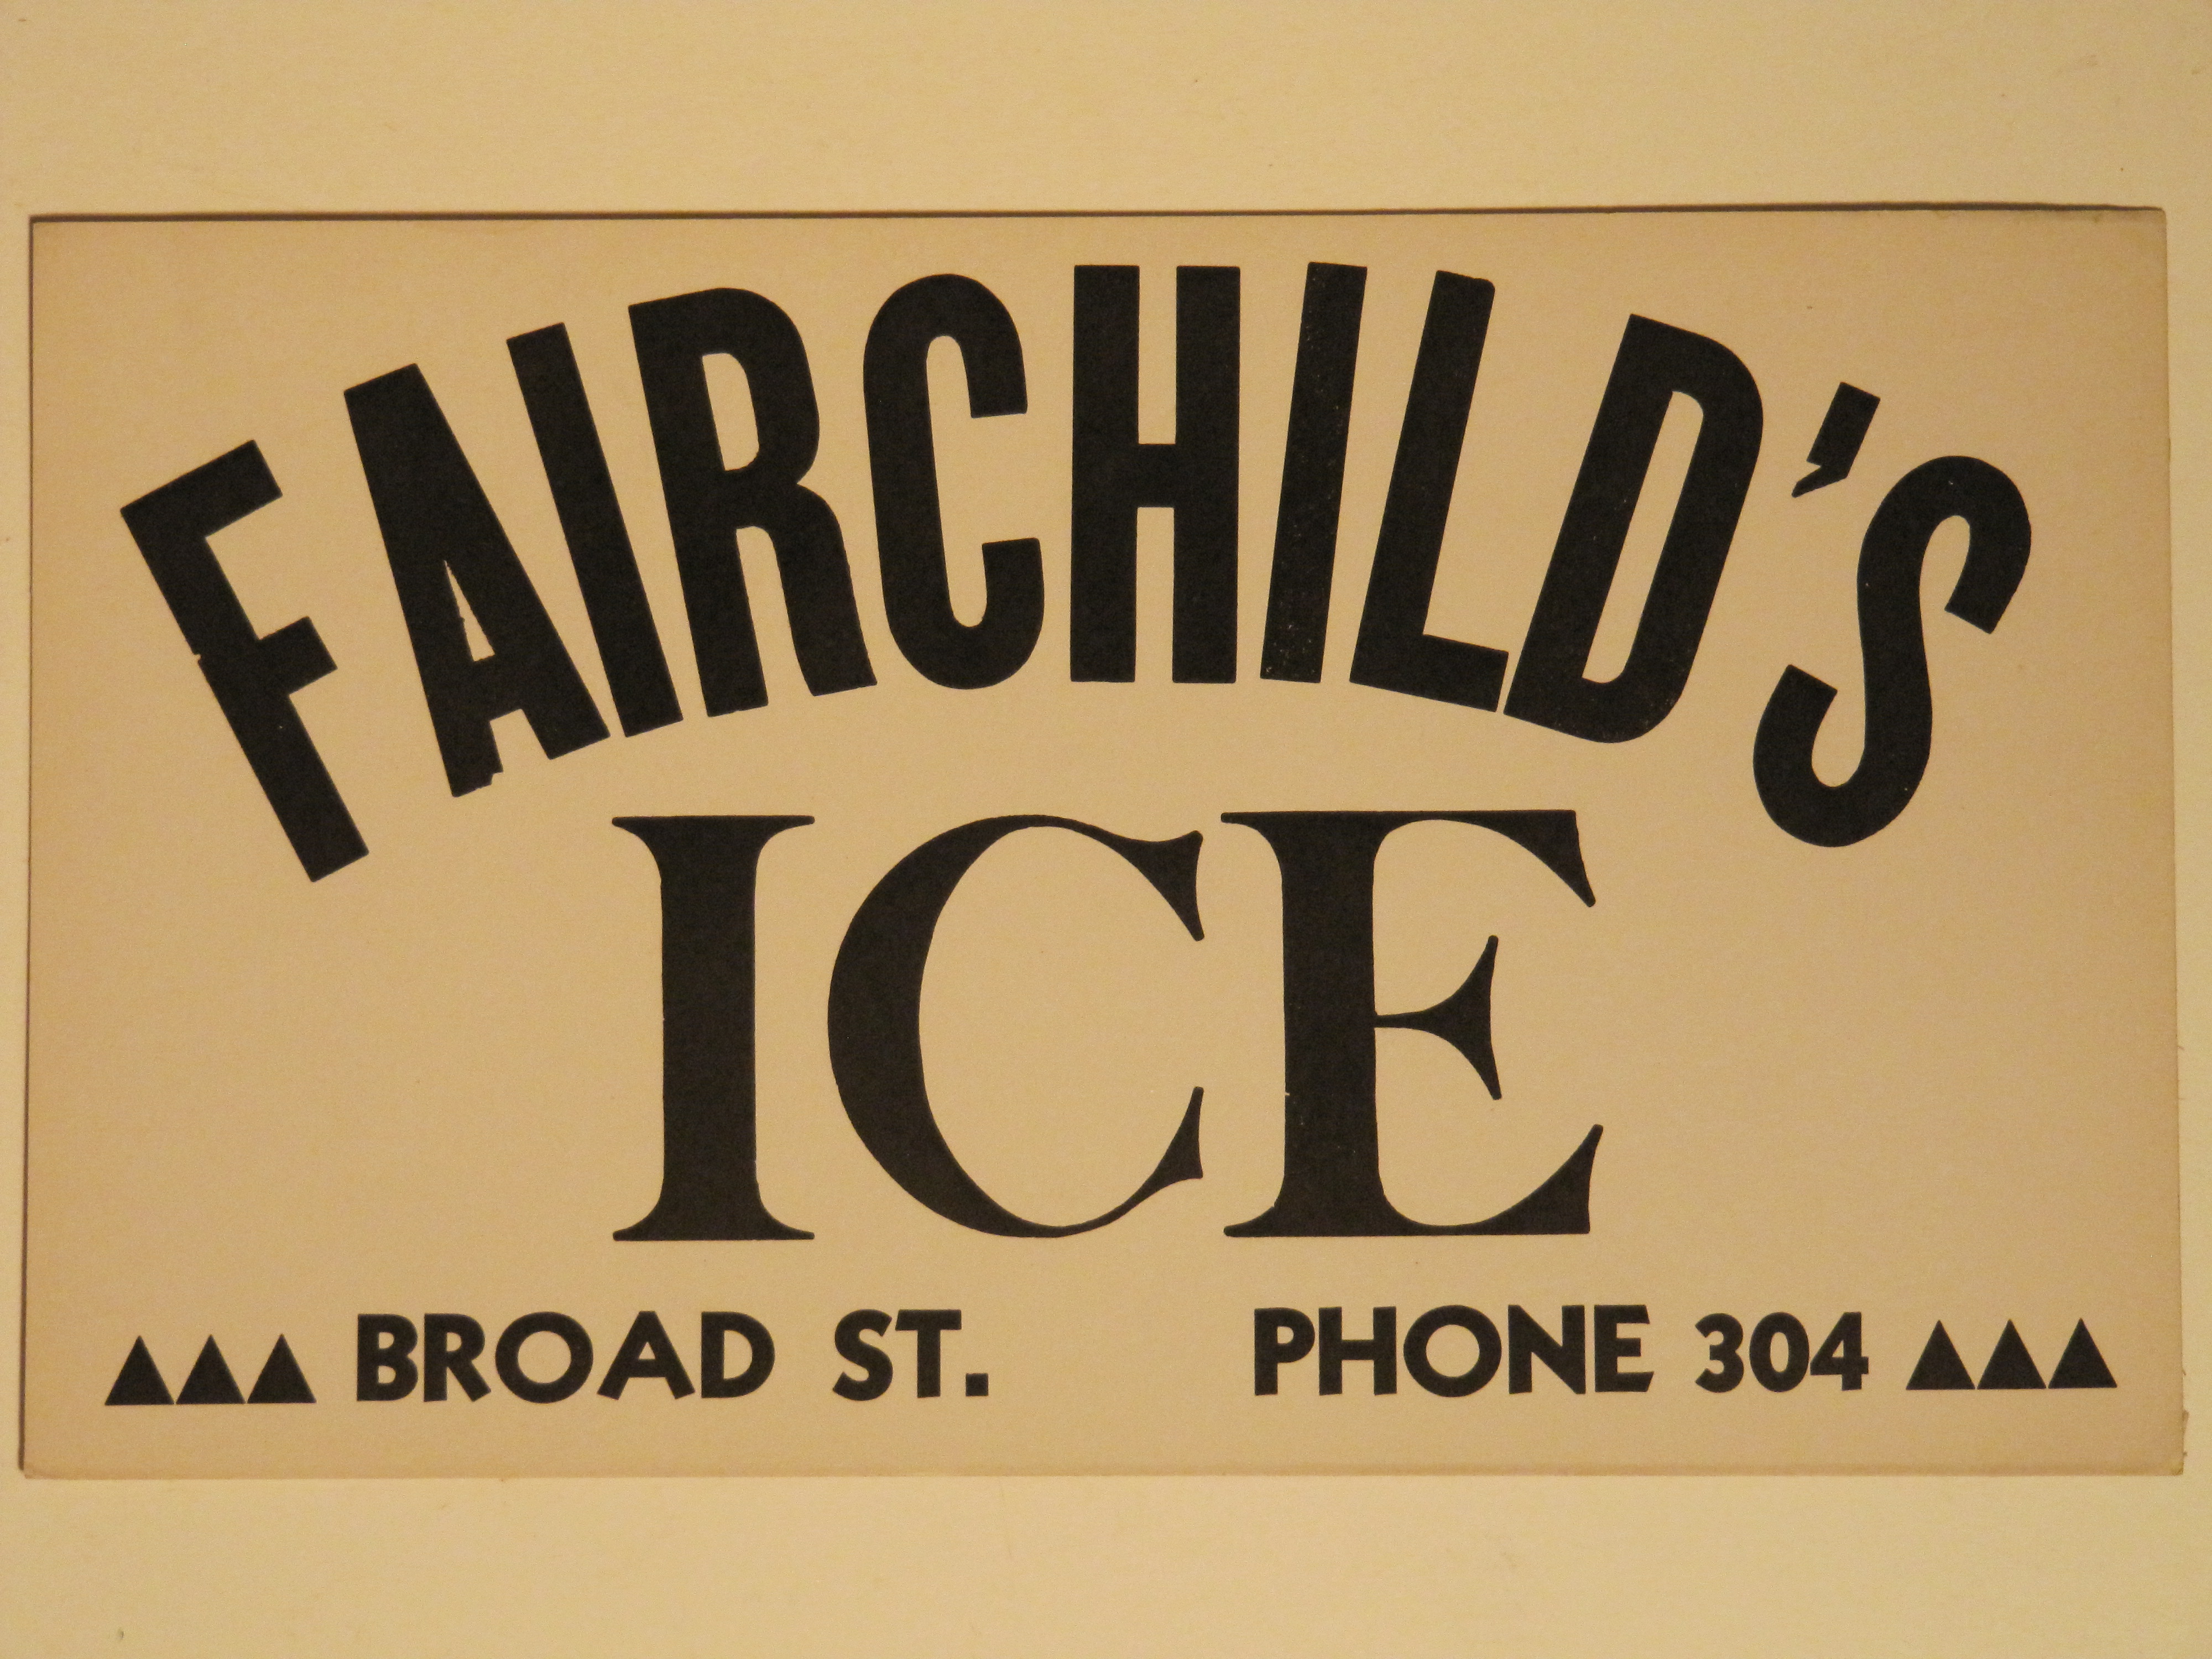 Fairchild's Ice